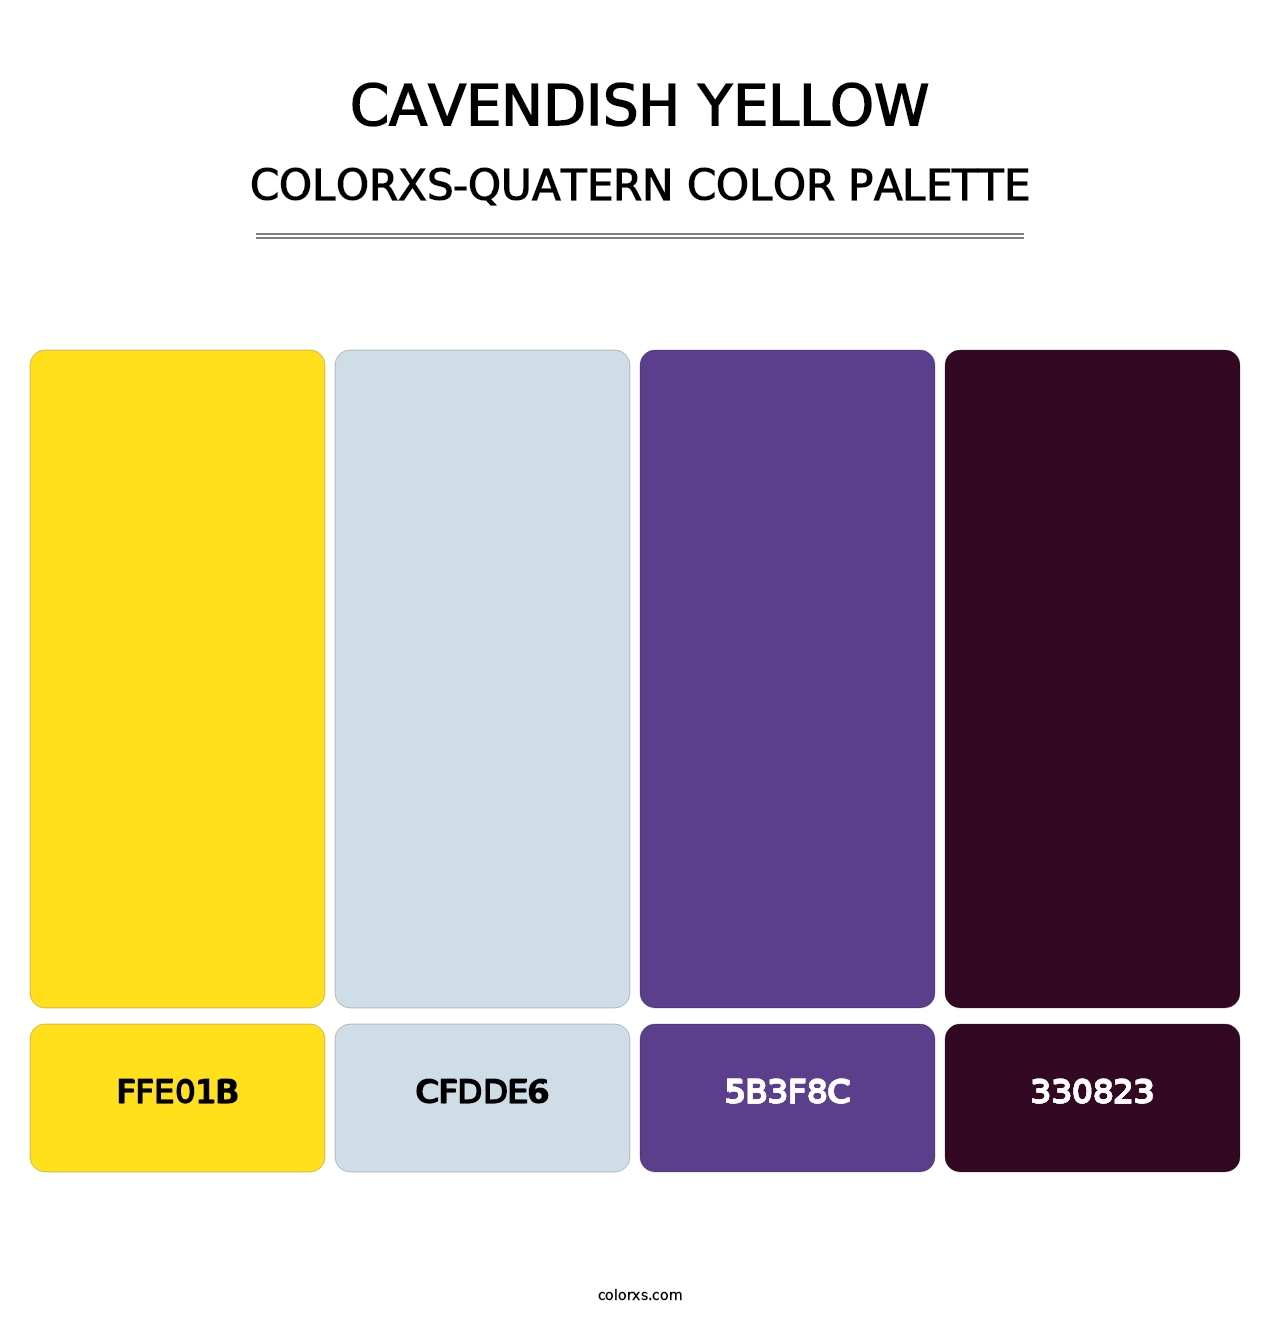 Cavendish Yellow - Colorxs Quatern Palette